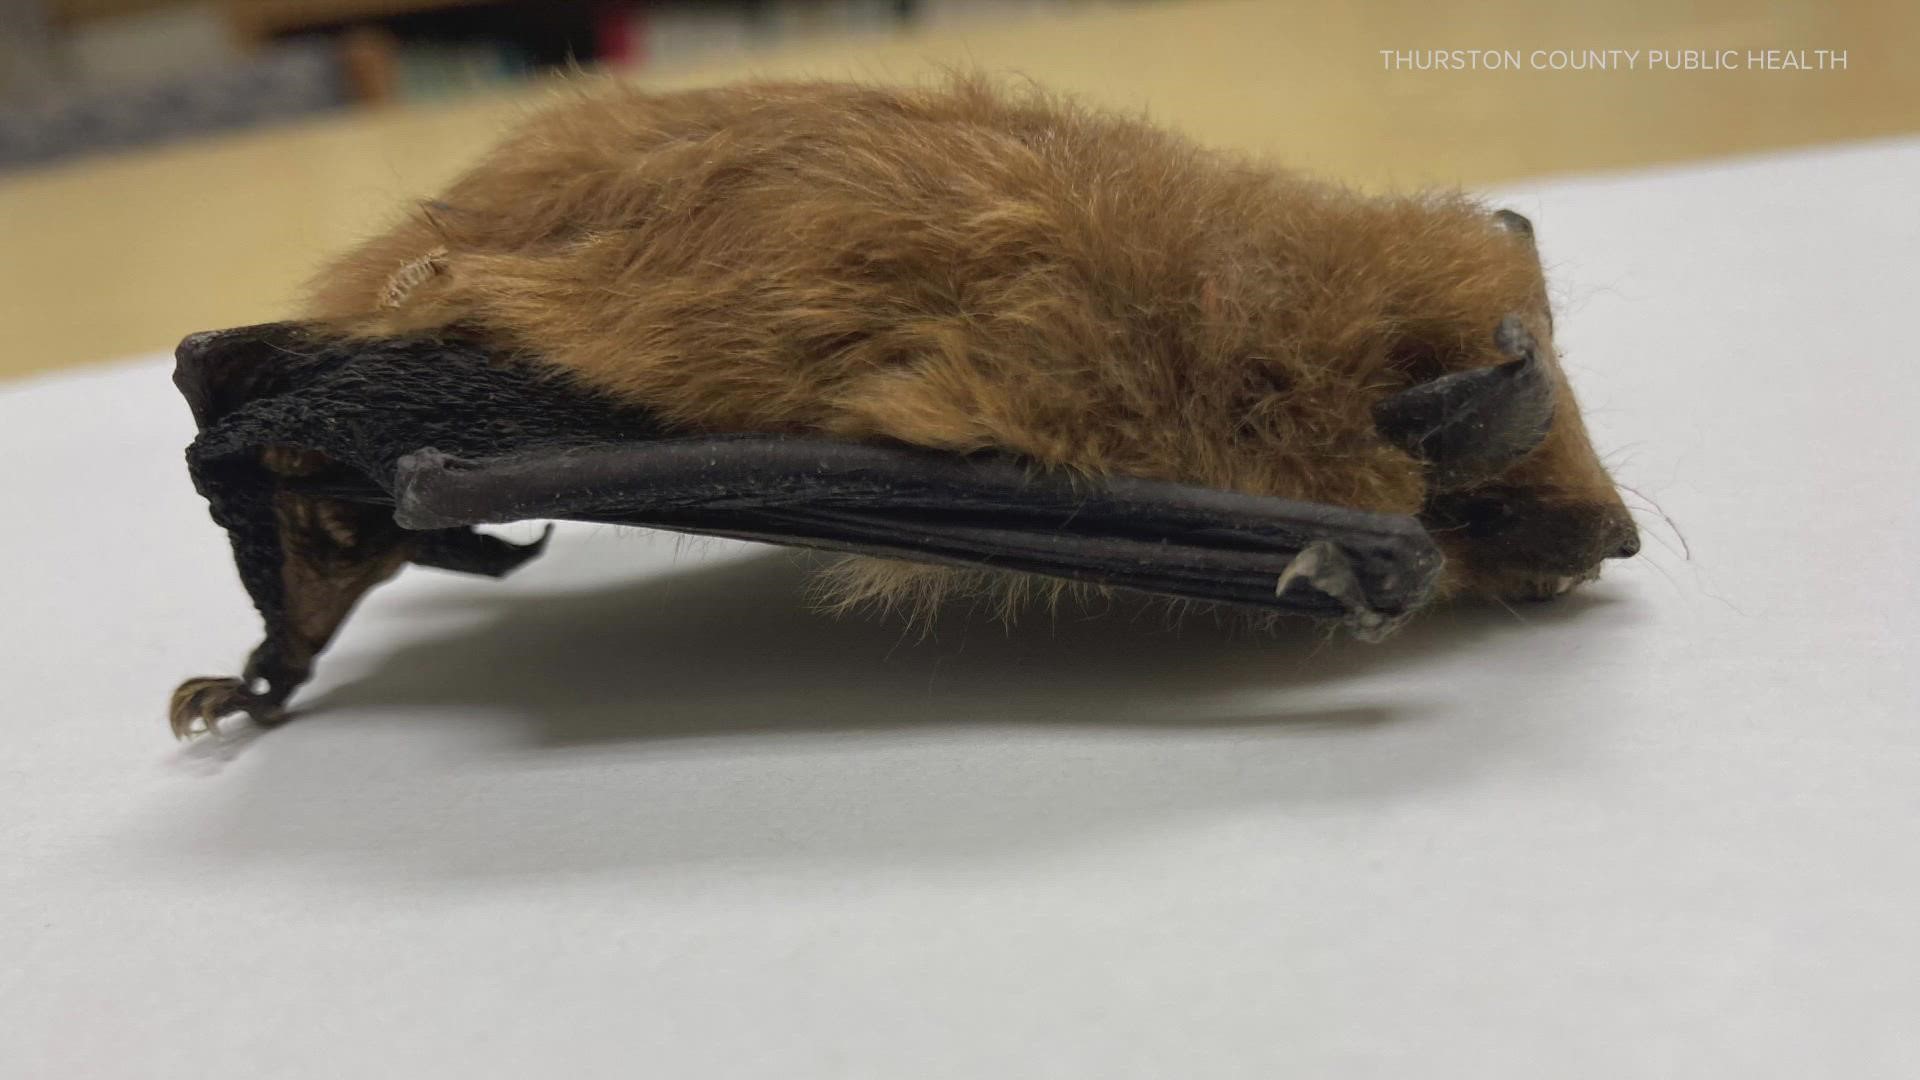 Family credits cat for killing rabid bat.